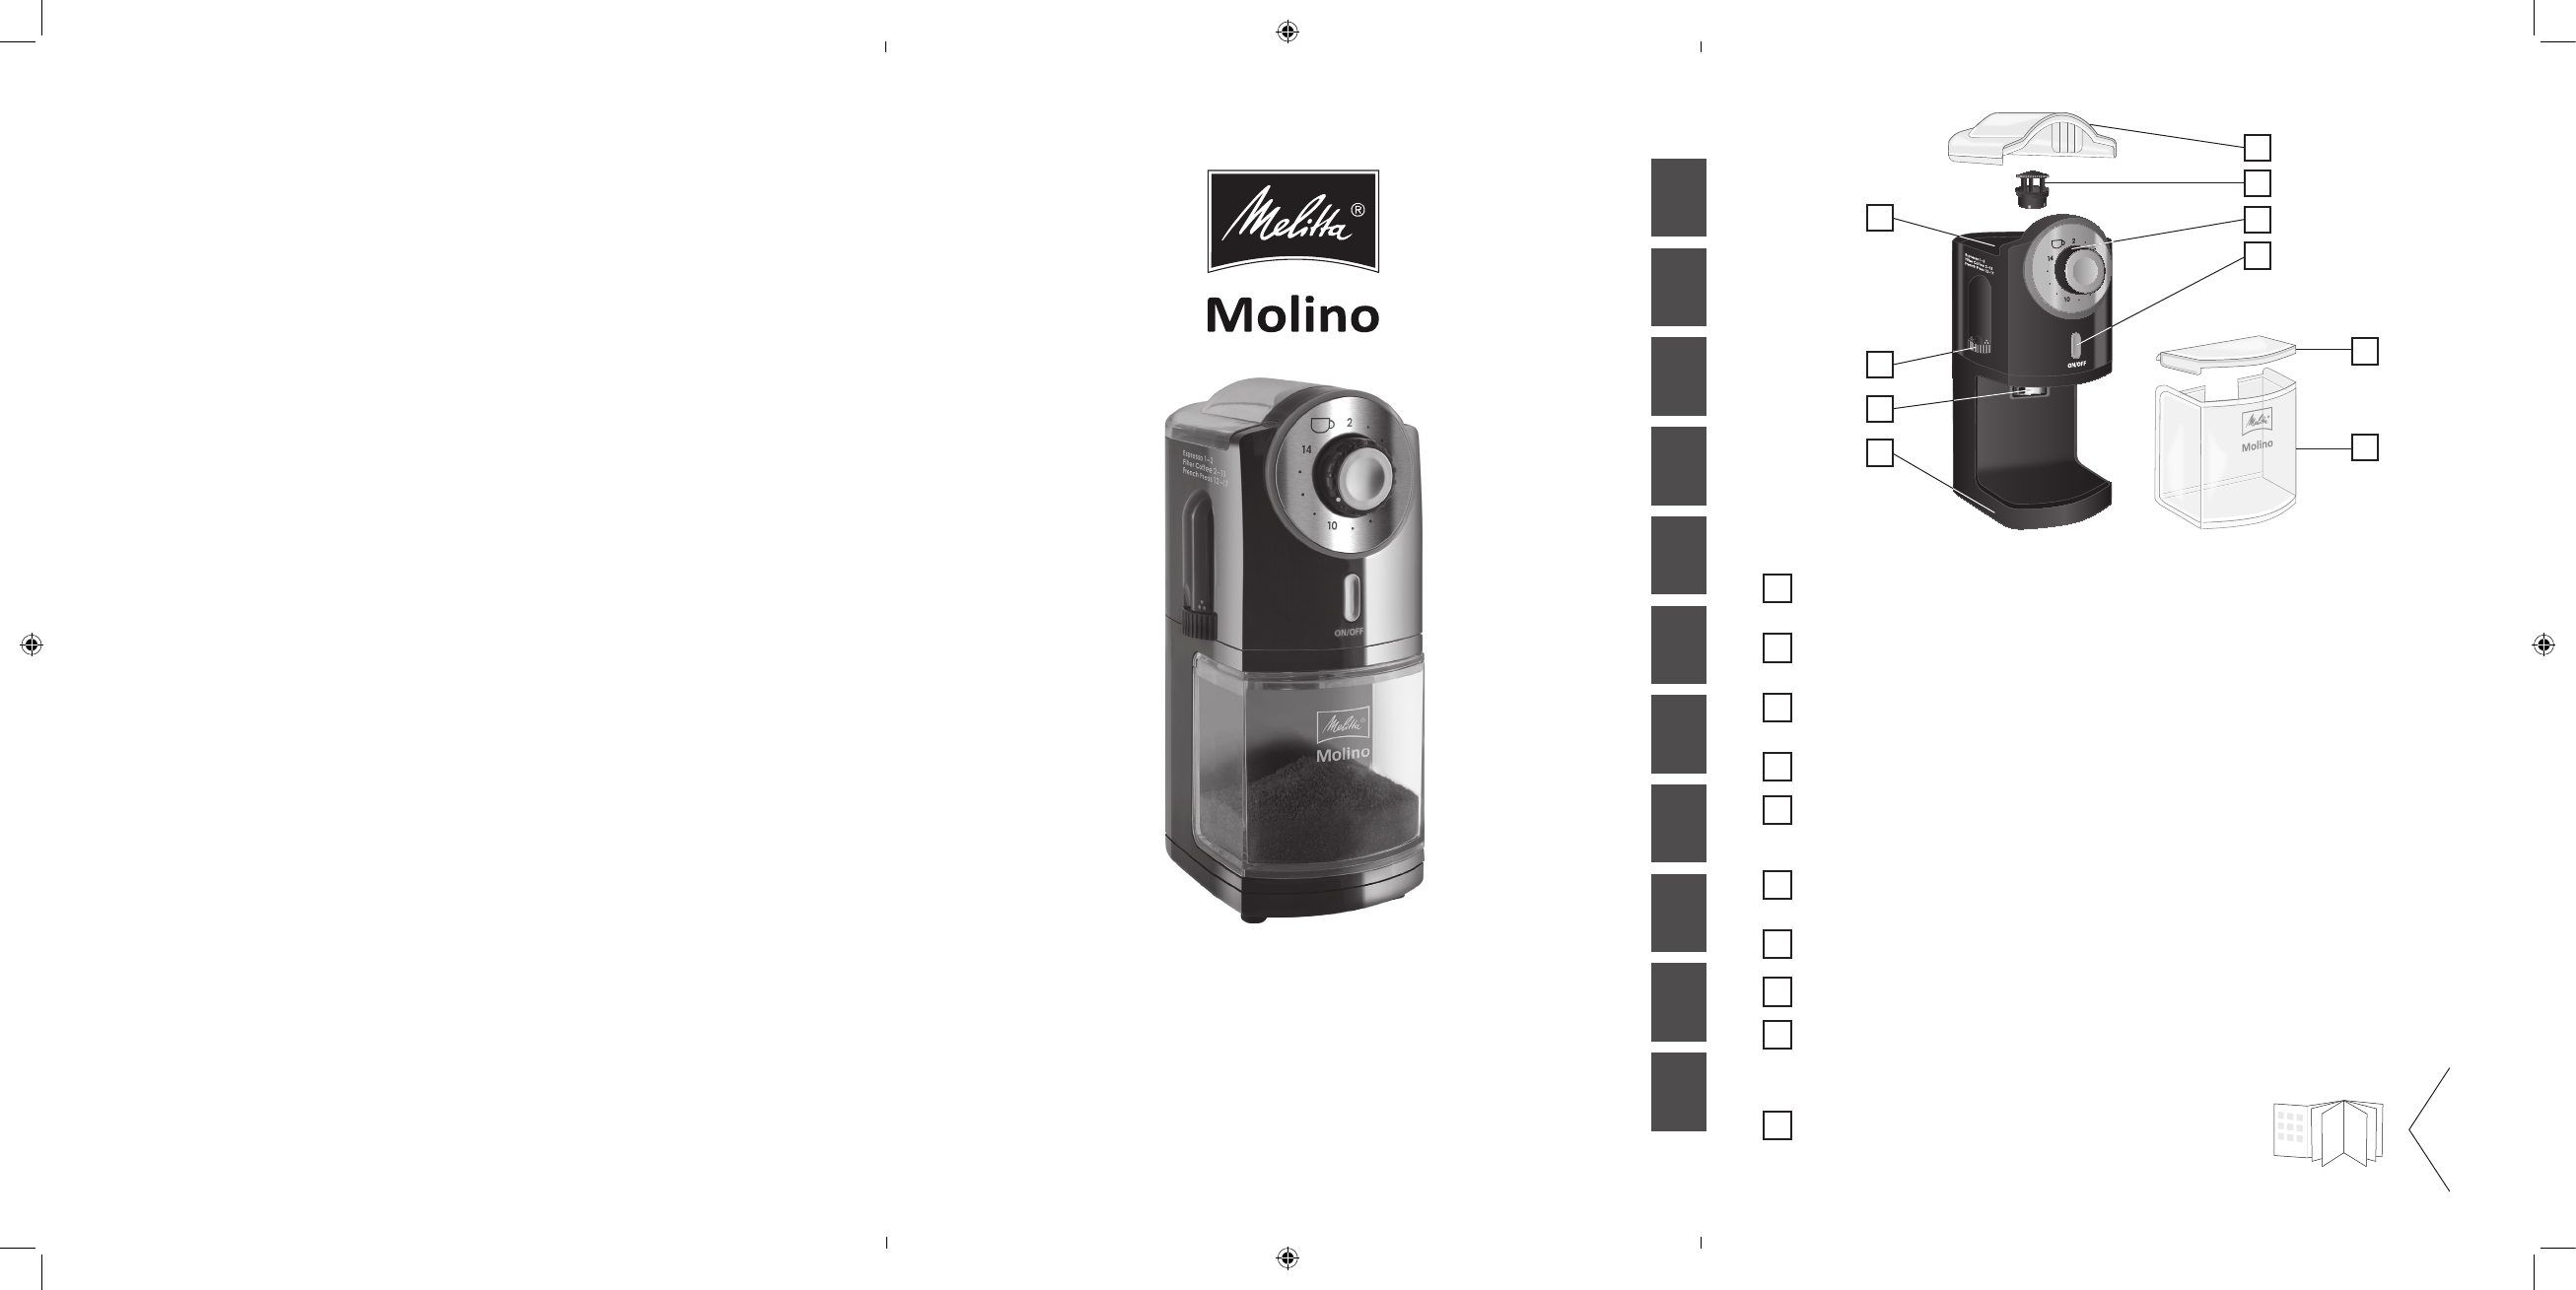 Manual Melitta 1019-01 Molino (page 1 of 30) (English, German, Dutch